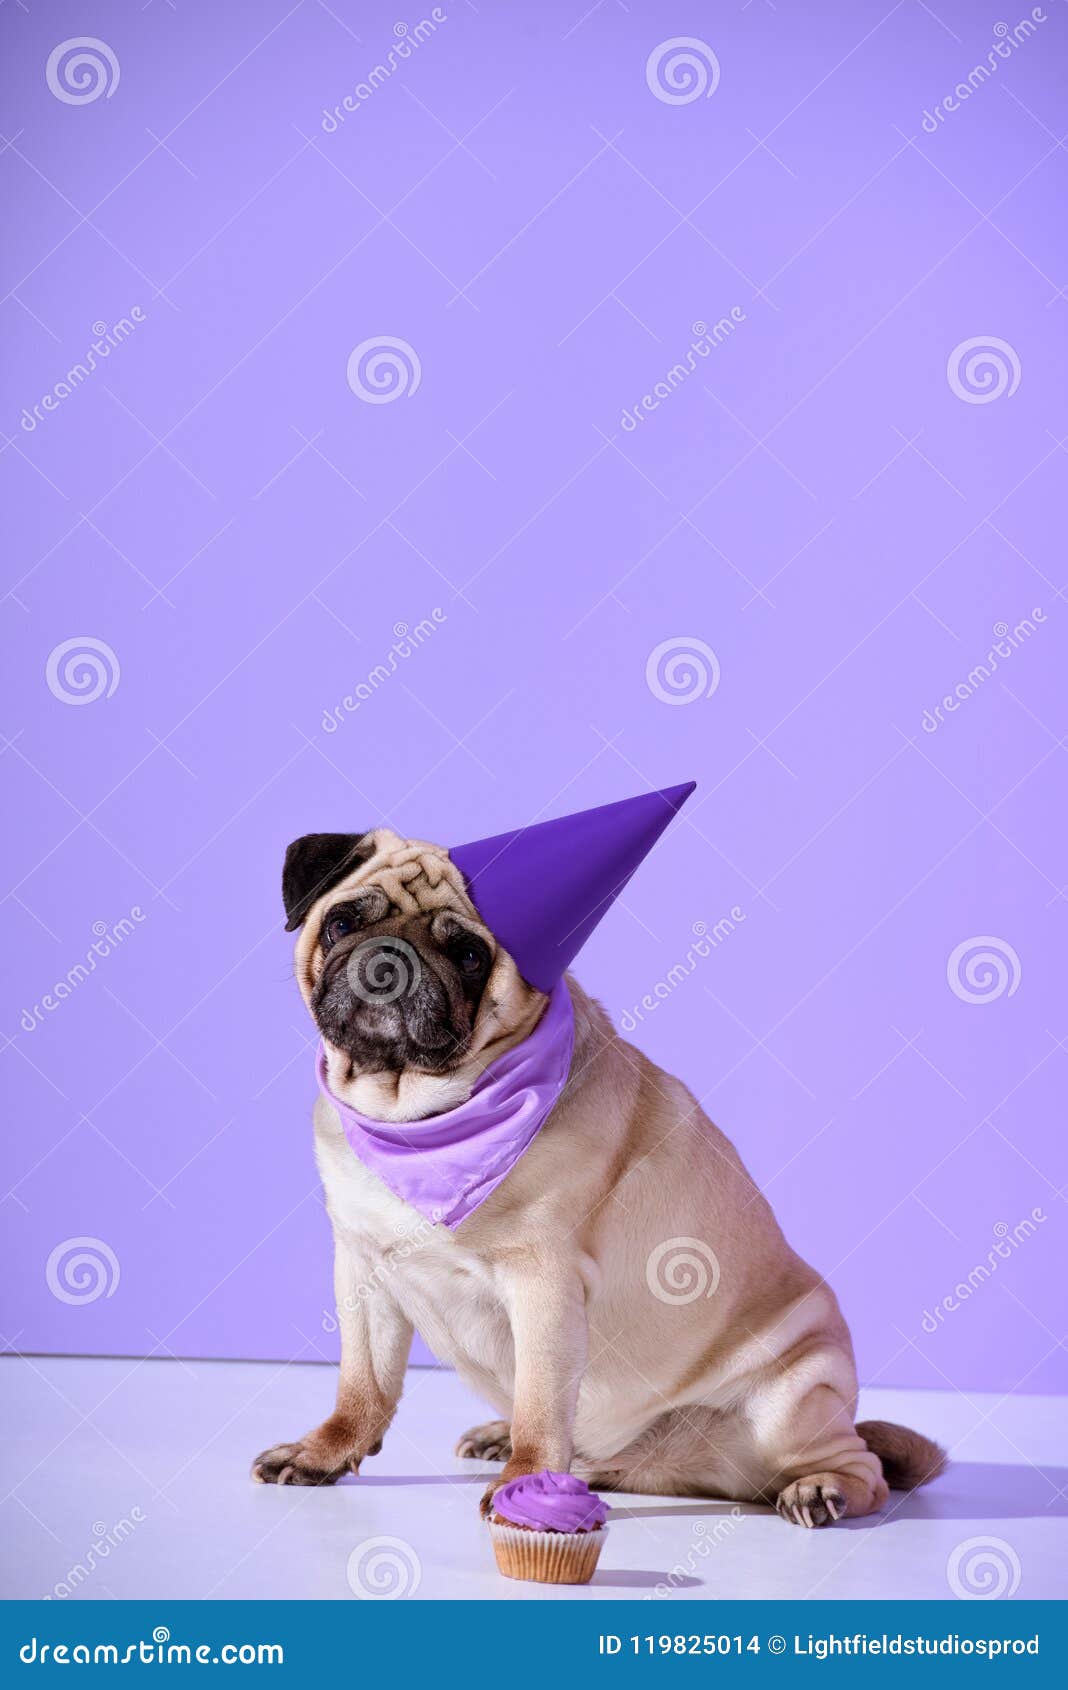 1,085 Dog Pug Birthday Stock Photos - Free & Royalty-Free Stock Photos from  Dreamstime